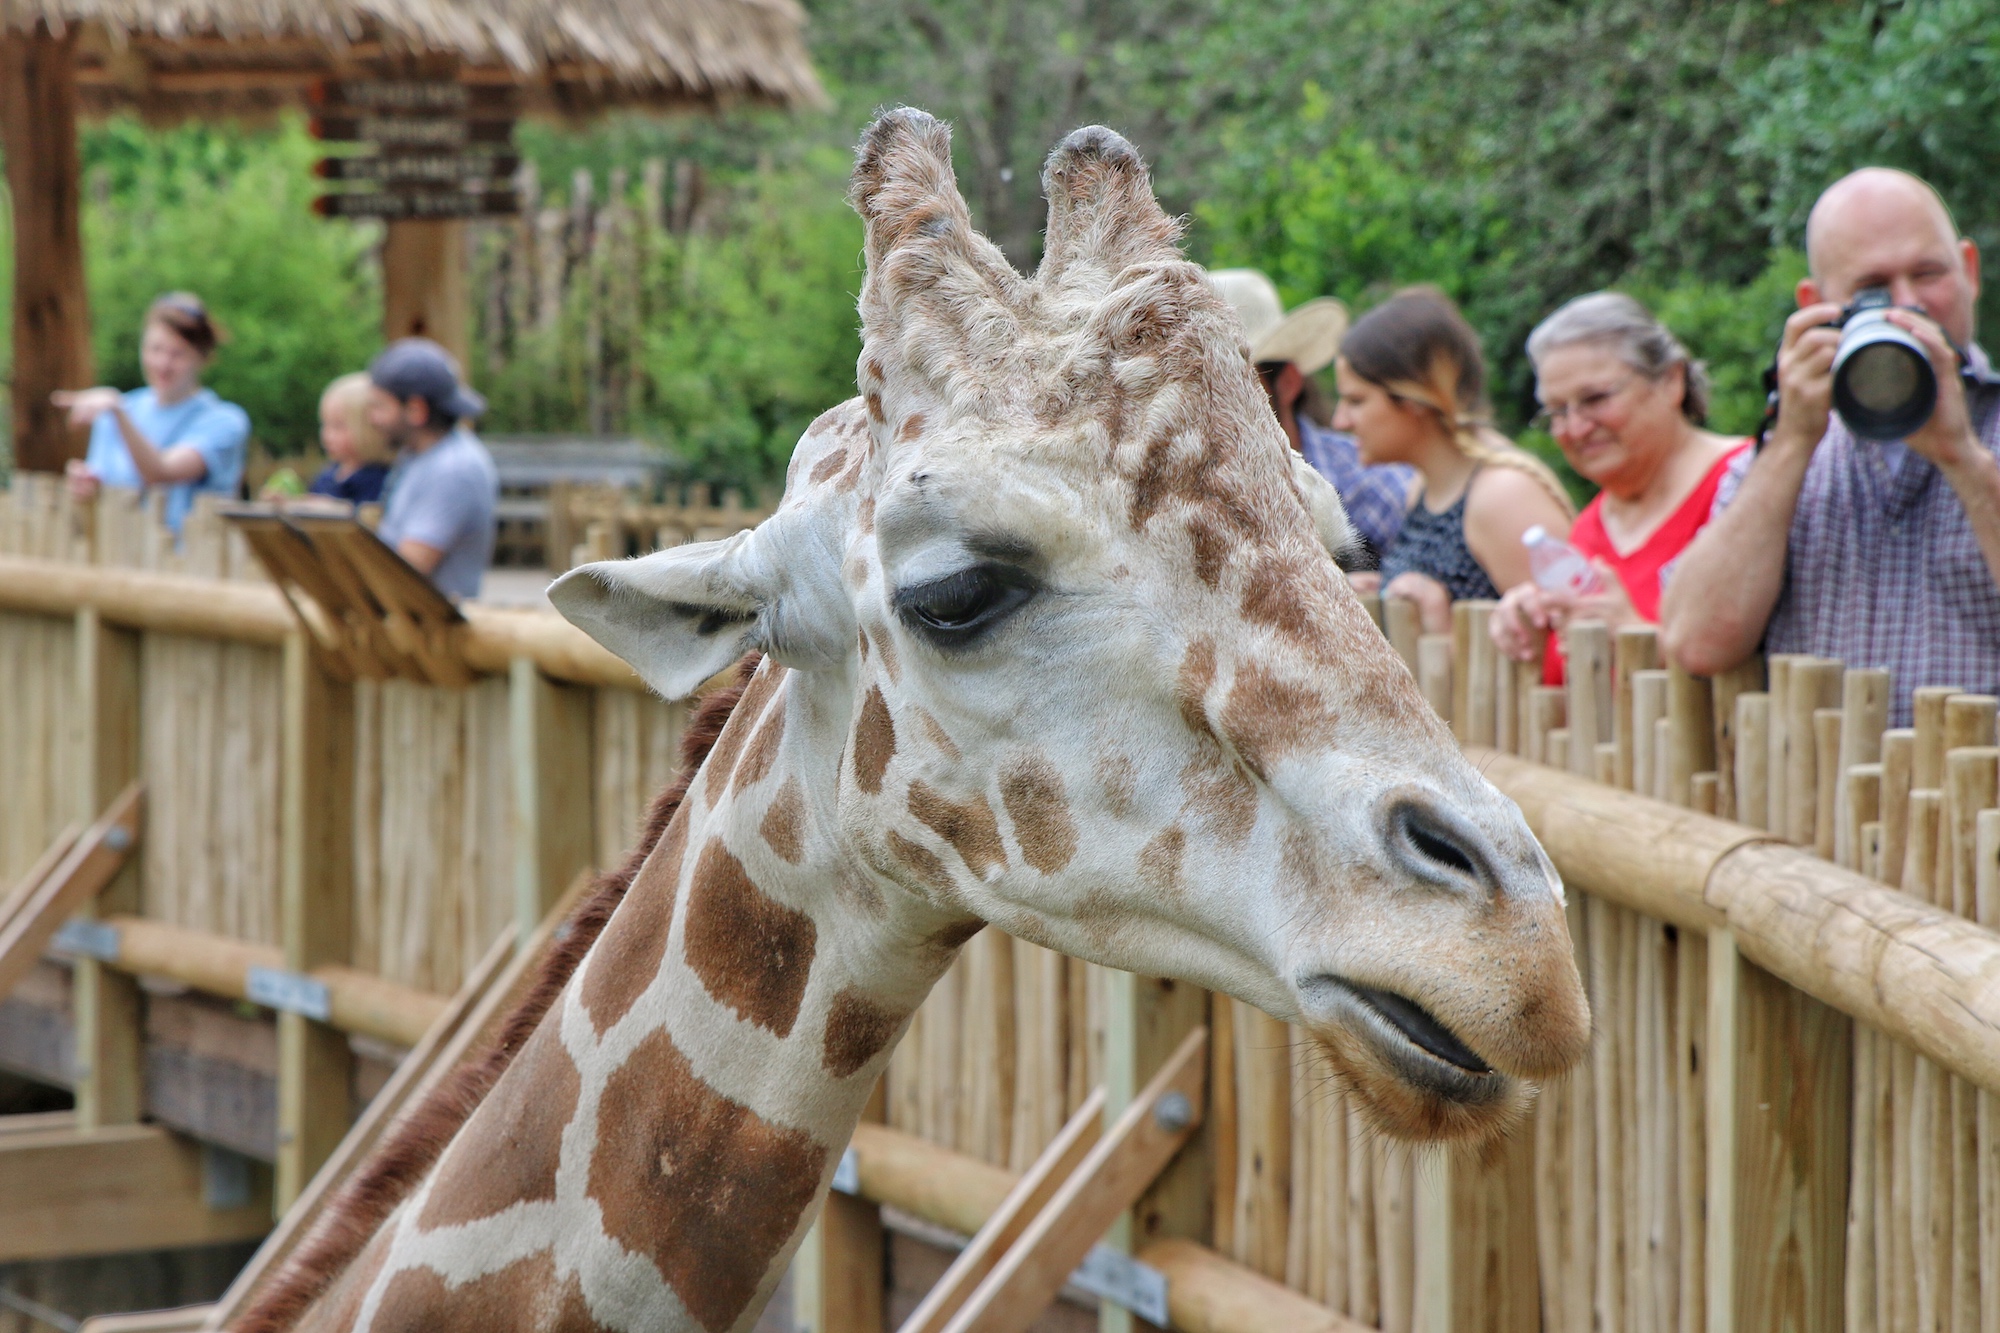 get up close to giraffes at African savanna exhibit